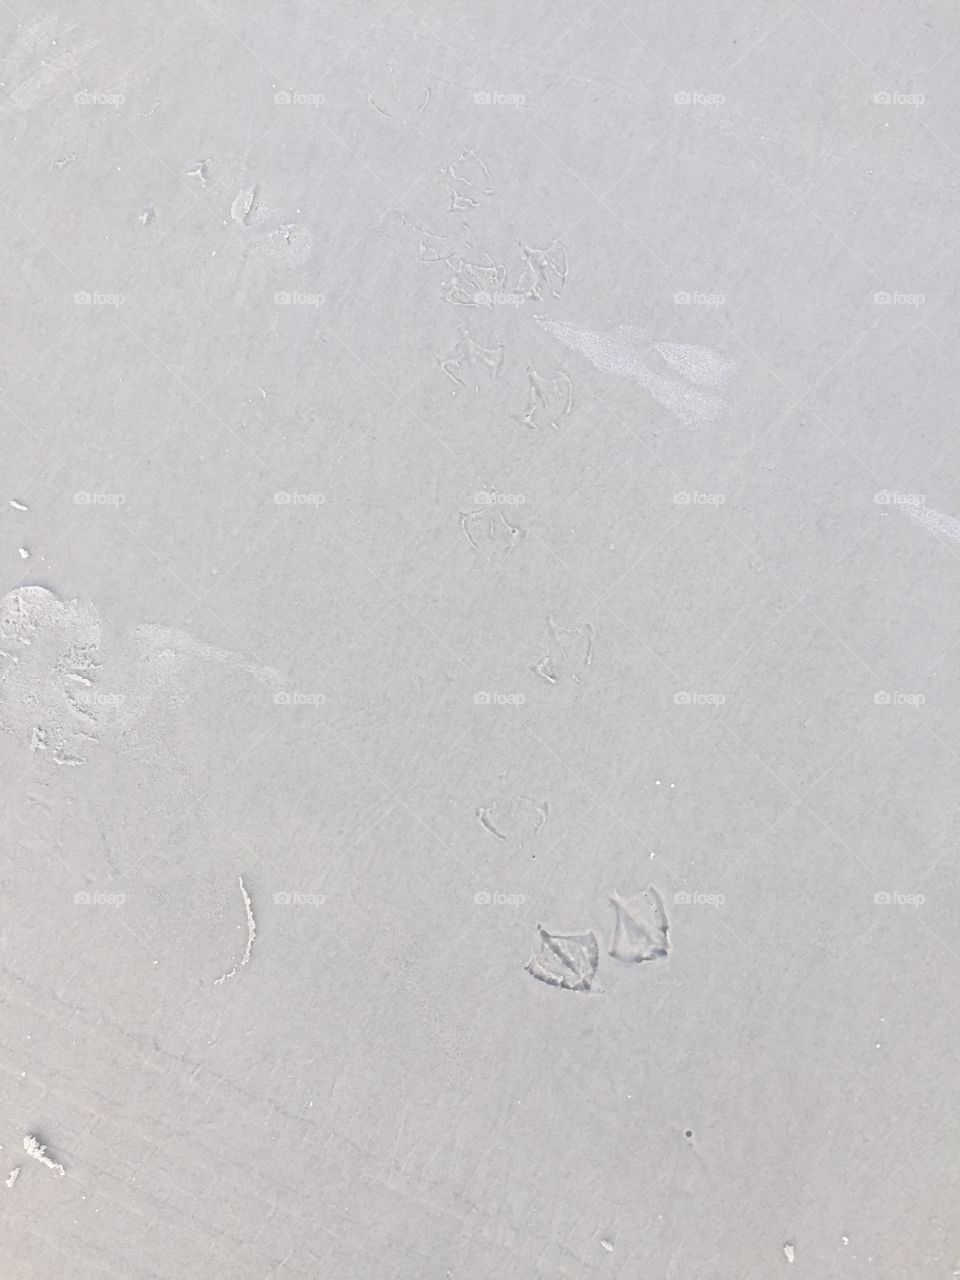 Seabird footprints 